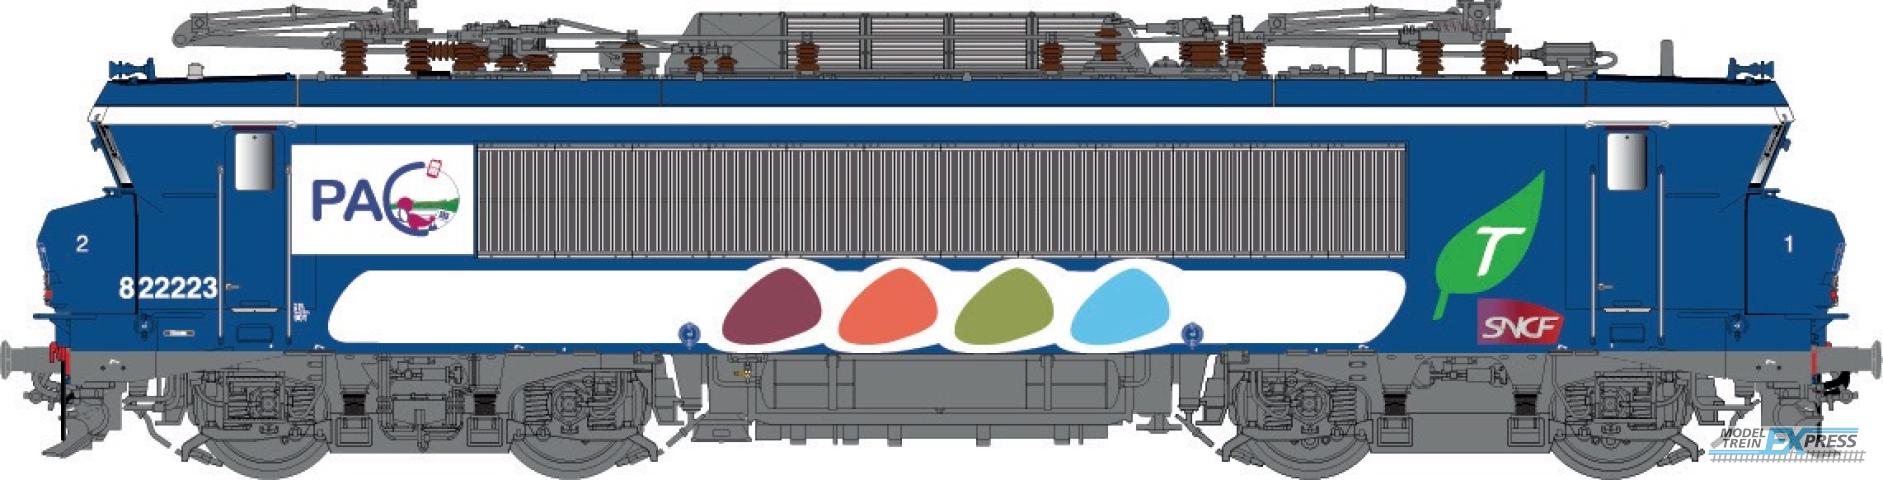 LS Models 11555S BB 22223, blauw, carmillon logo, Transilien, front nummer, kleine cabine  /  Ep. VI  /  SNCF  /  HO  /  AC SOUND  /  1 P.